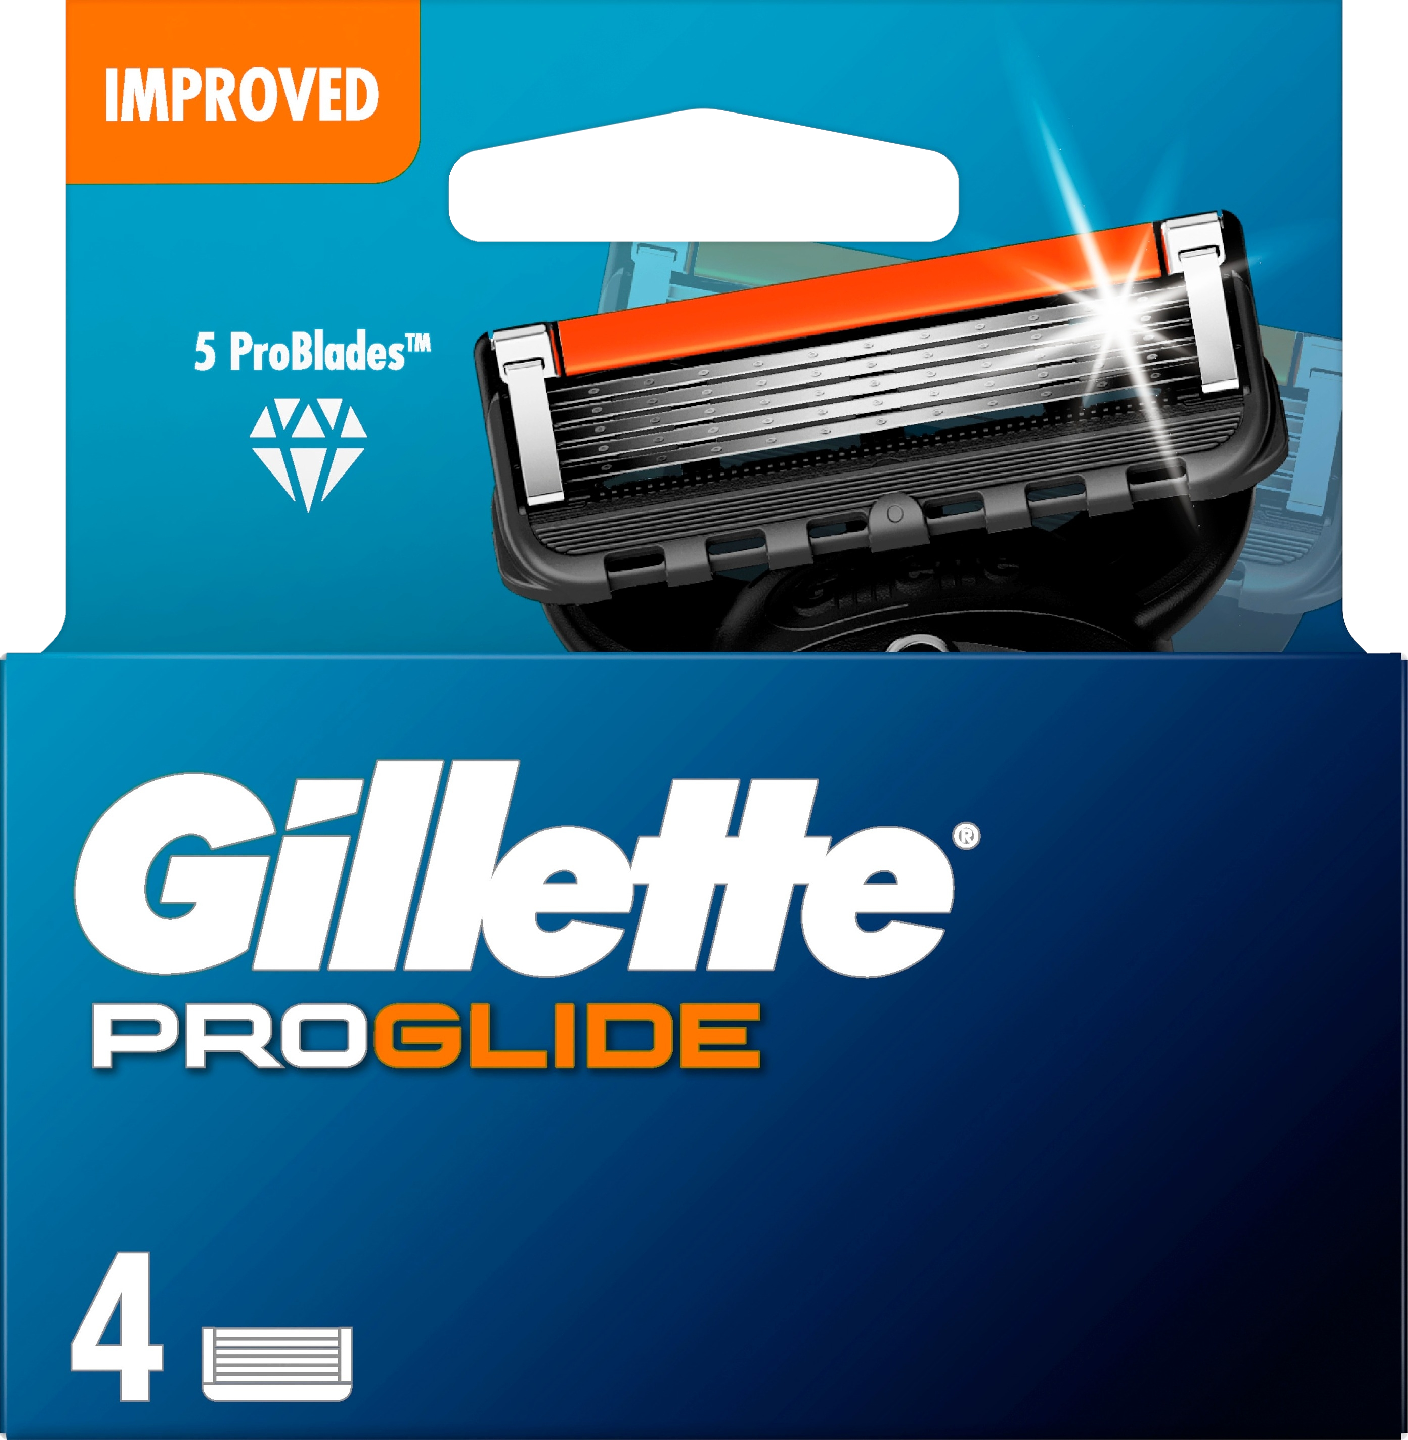 Gillette Fusion5 Proglide terä 4kpl